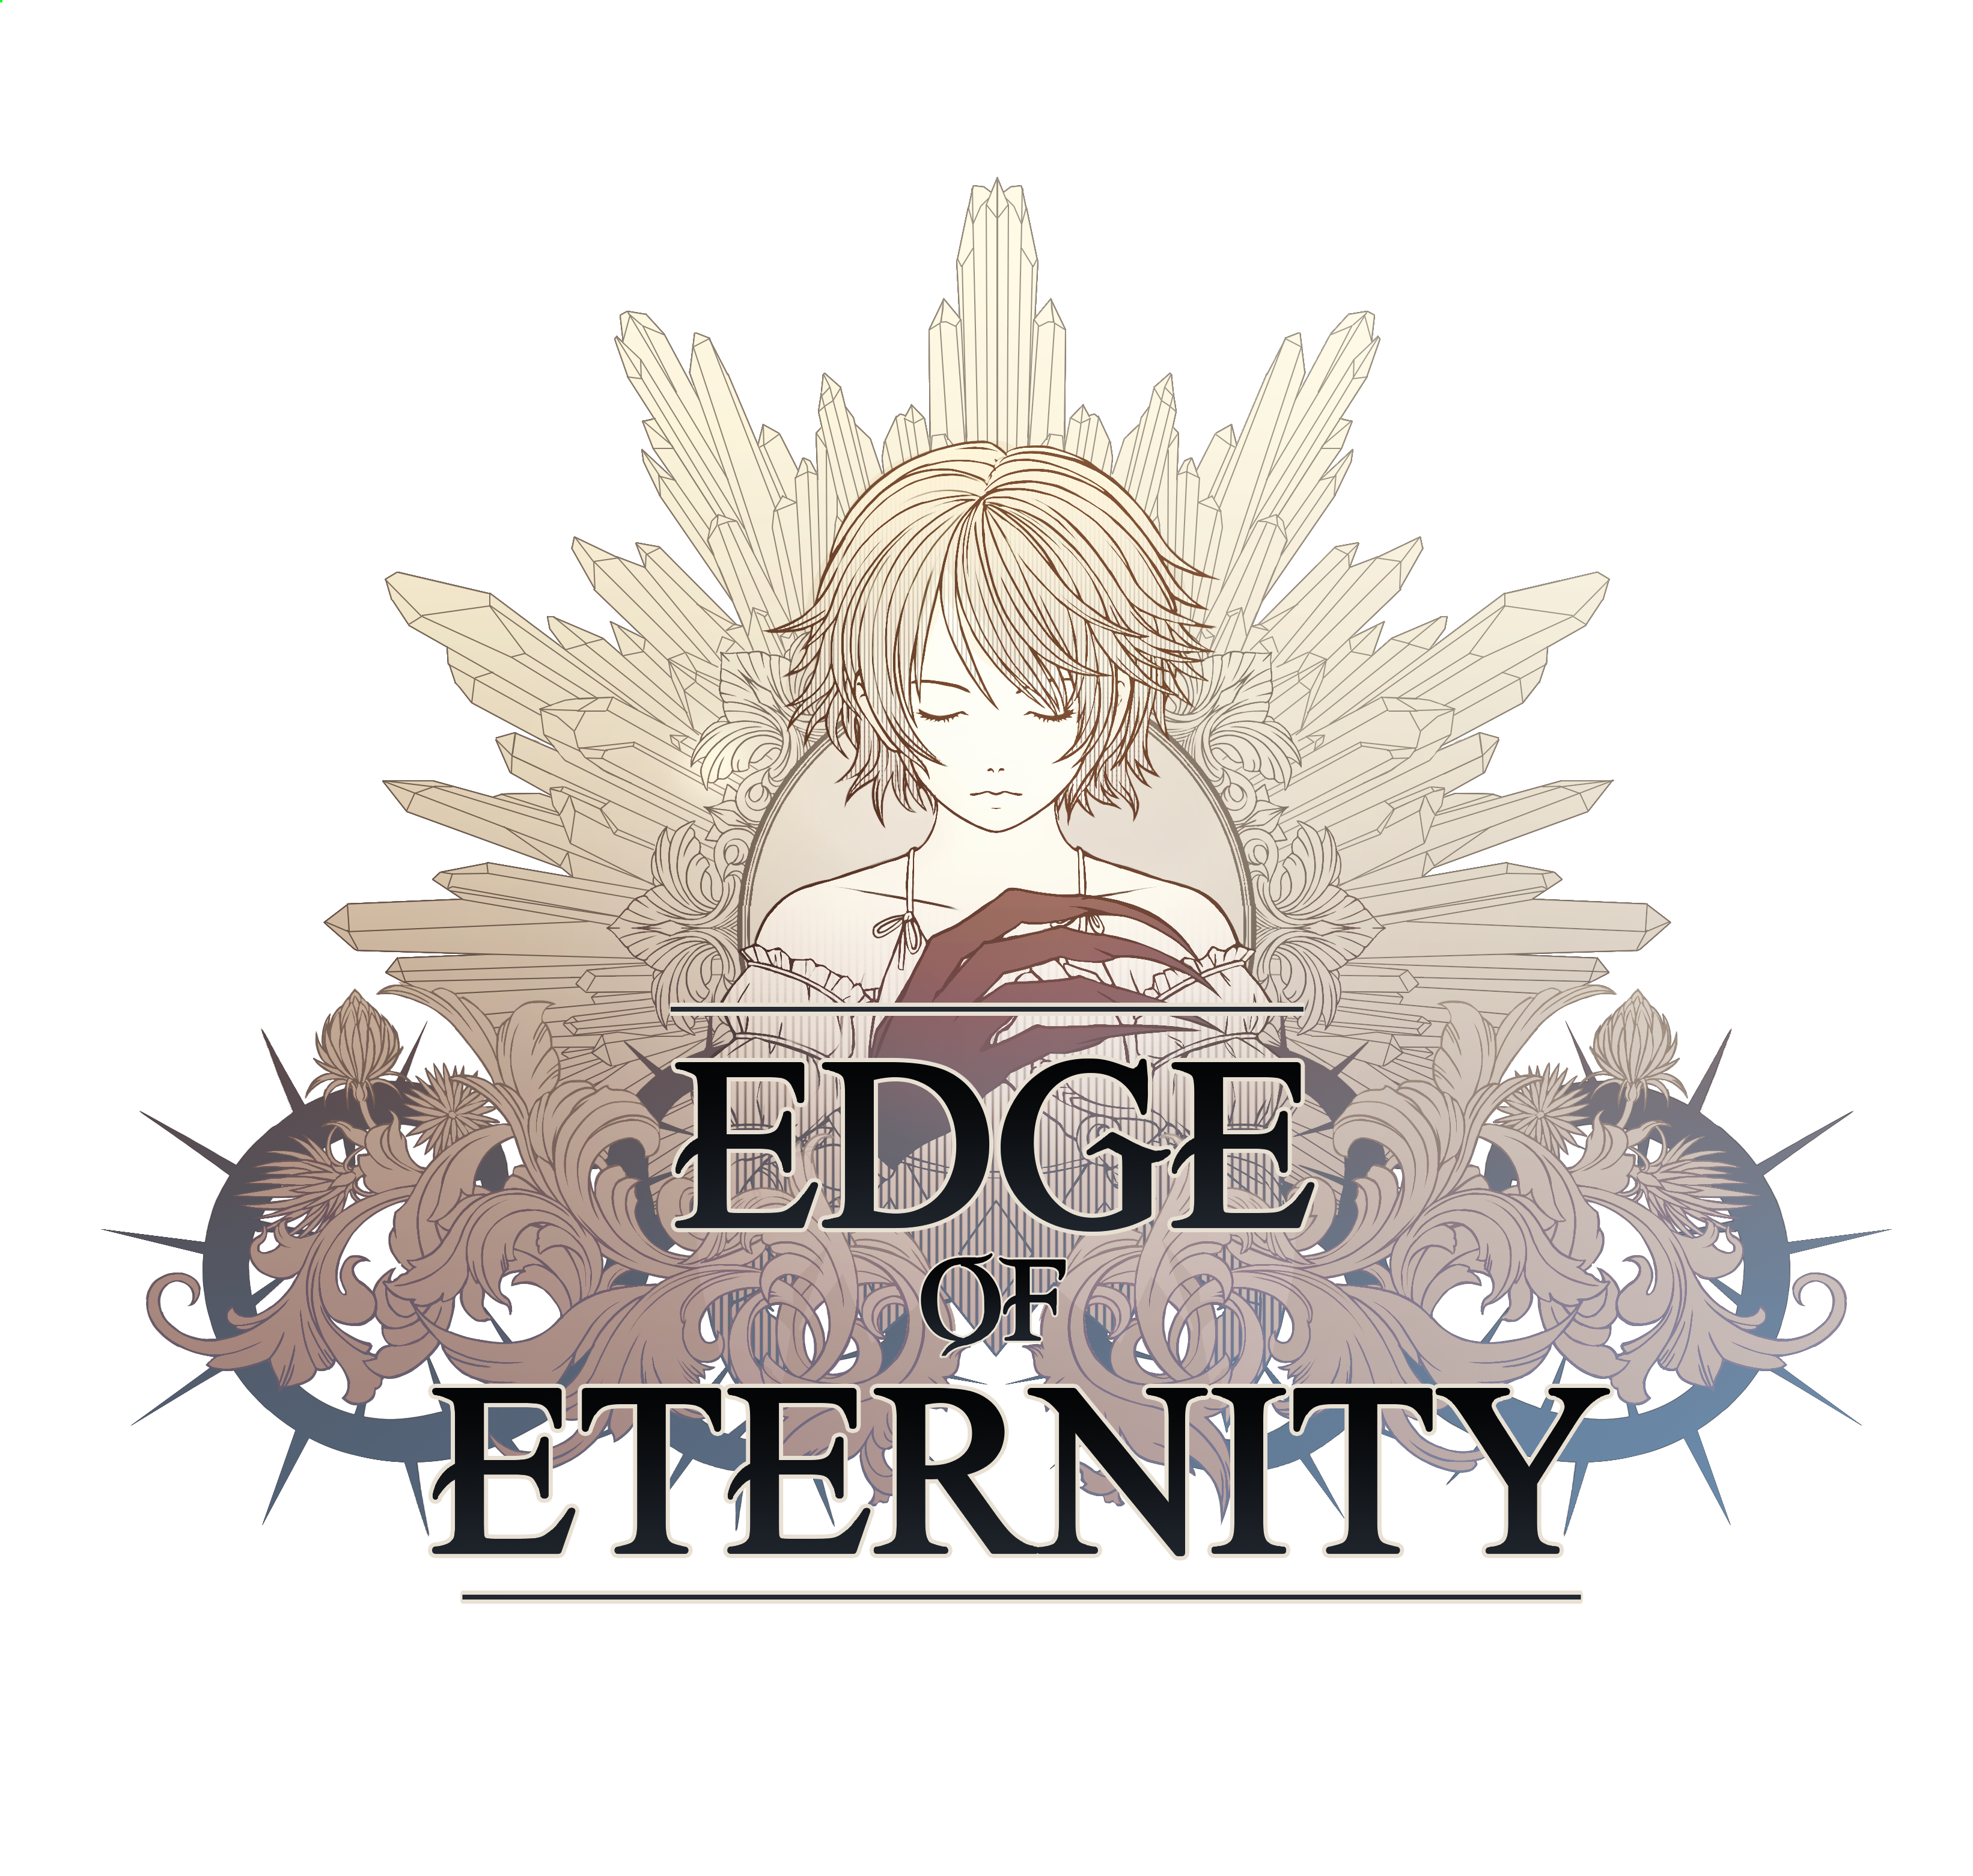 Edge of eternity steam фото 117